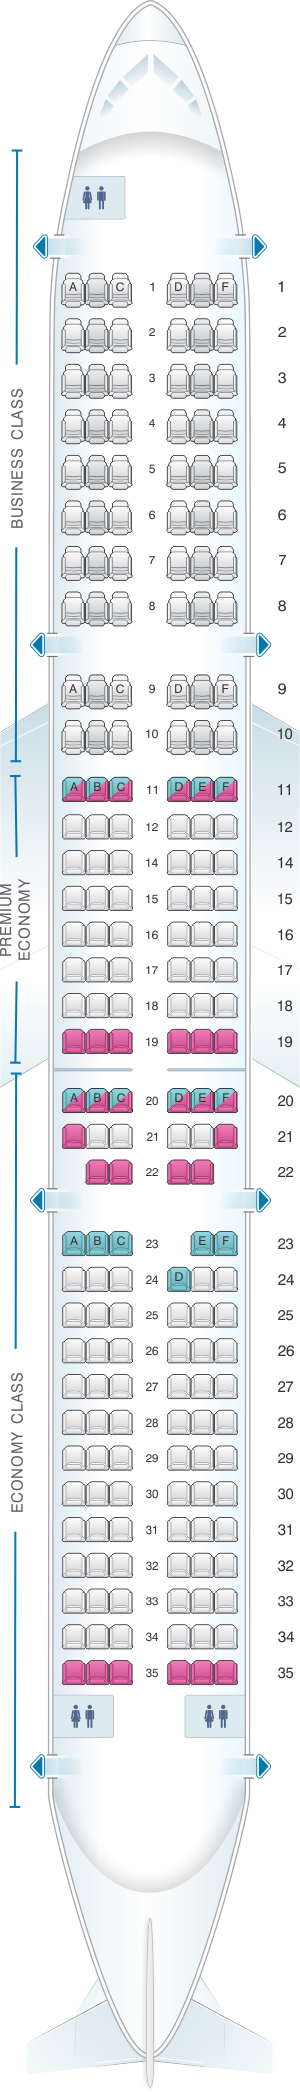 Seat Map Air France Airbus A321 Europe | SeatMaestro.com